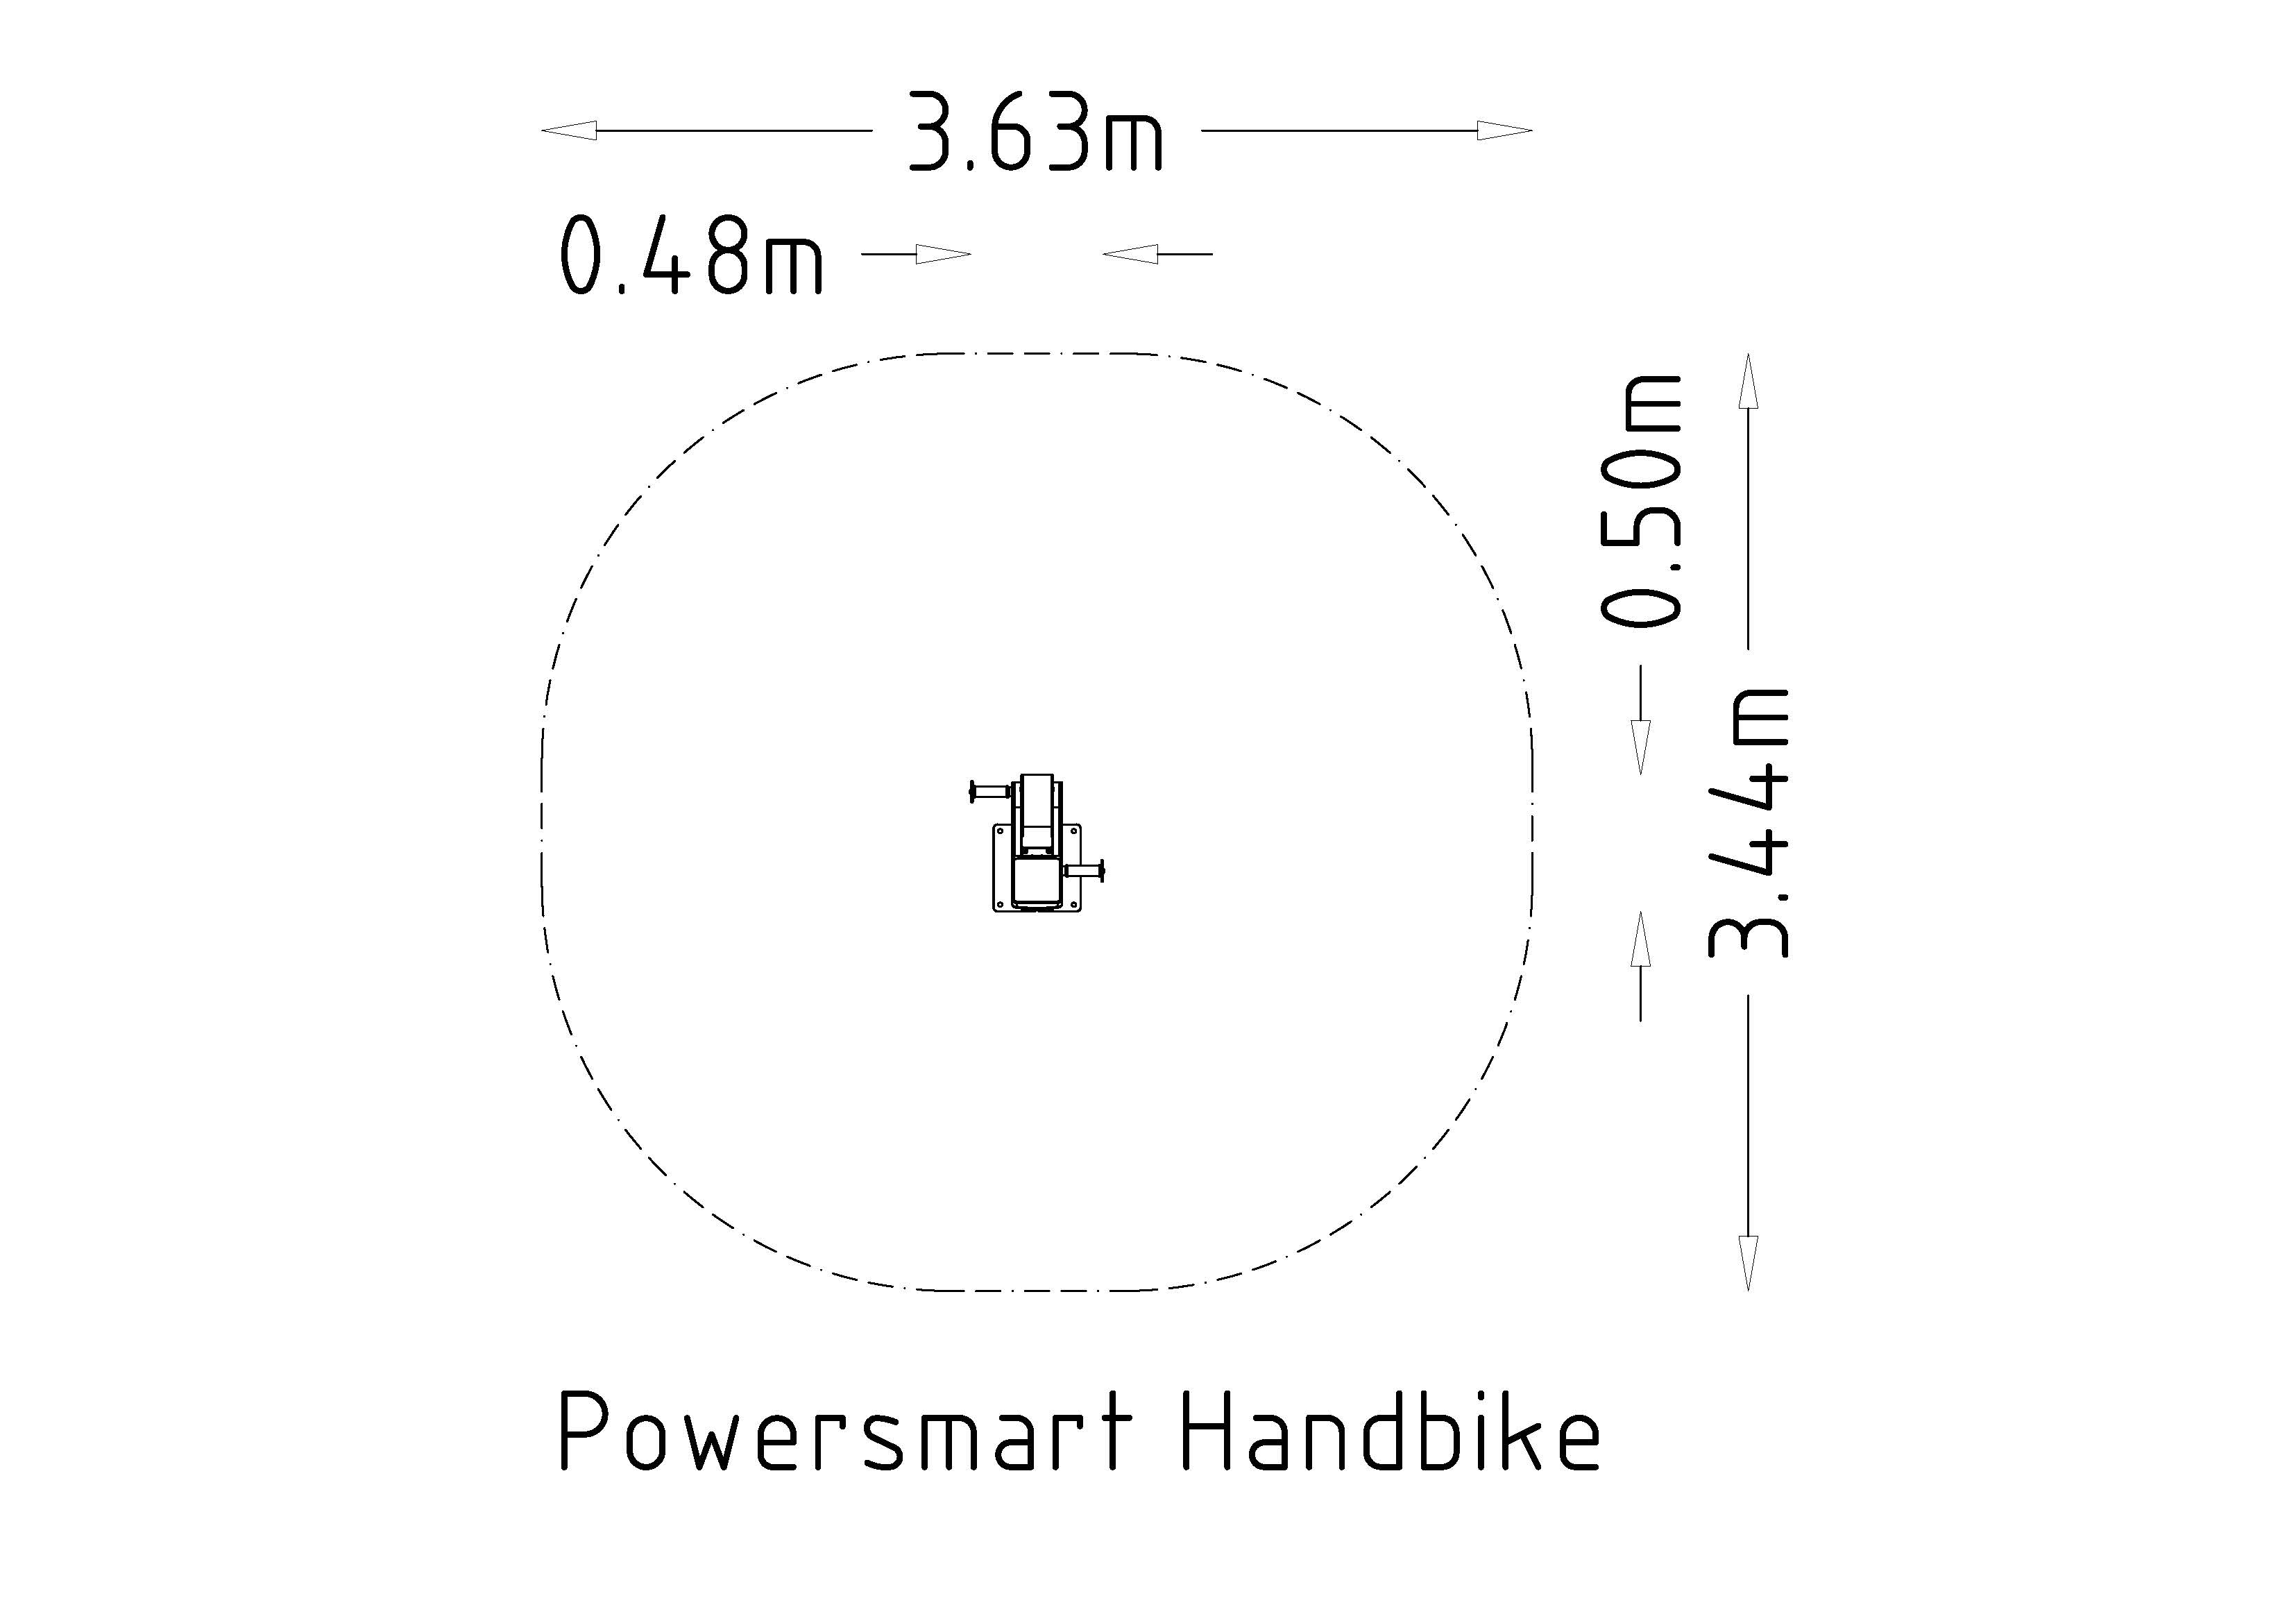 TGO PowerSmart Handbike